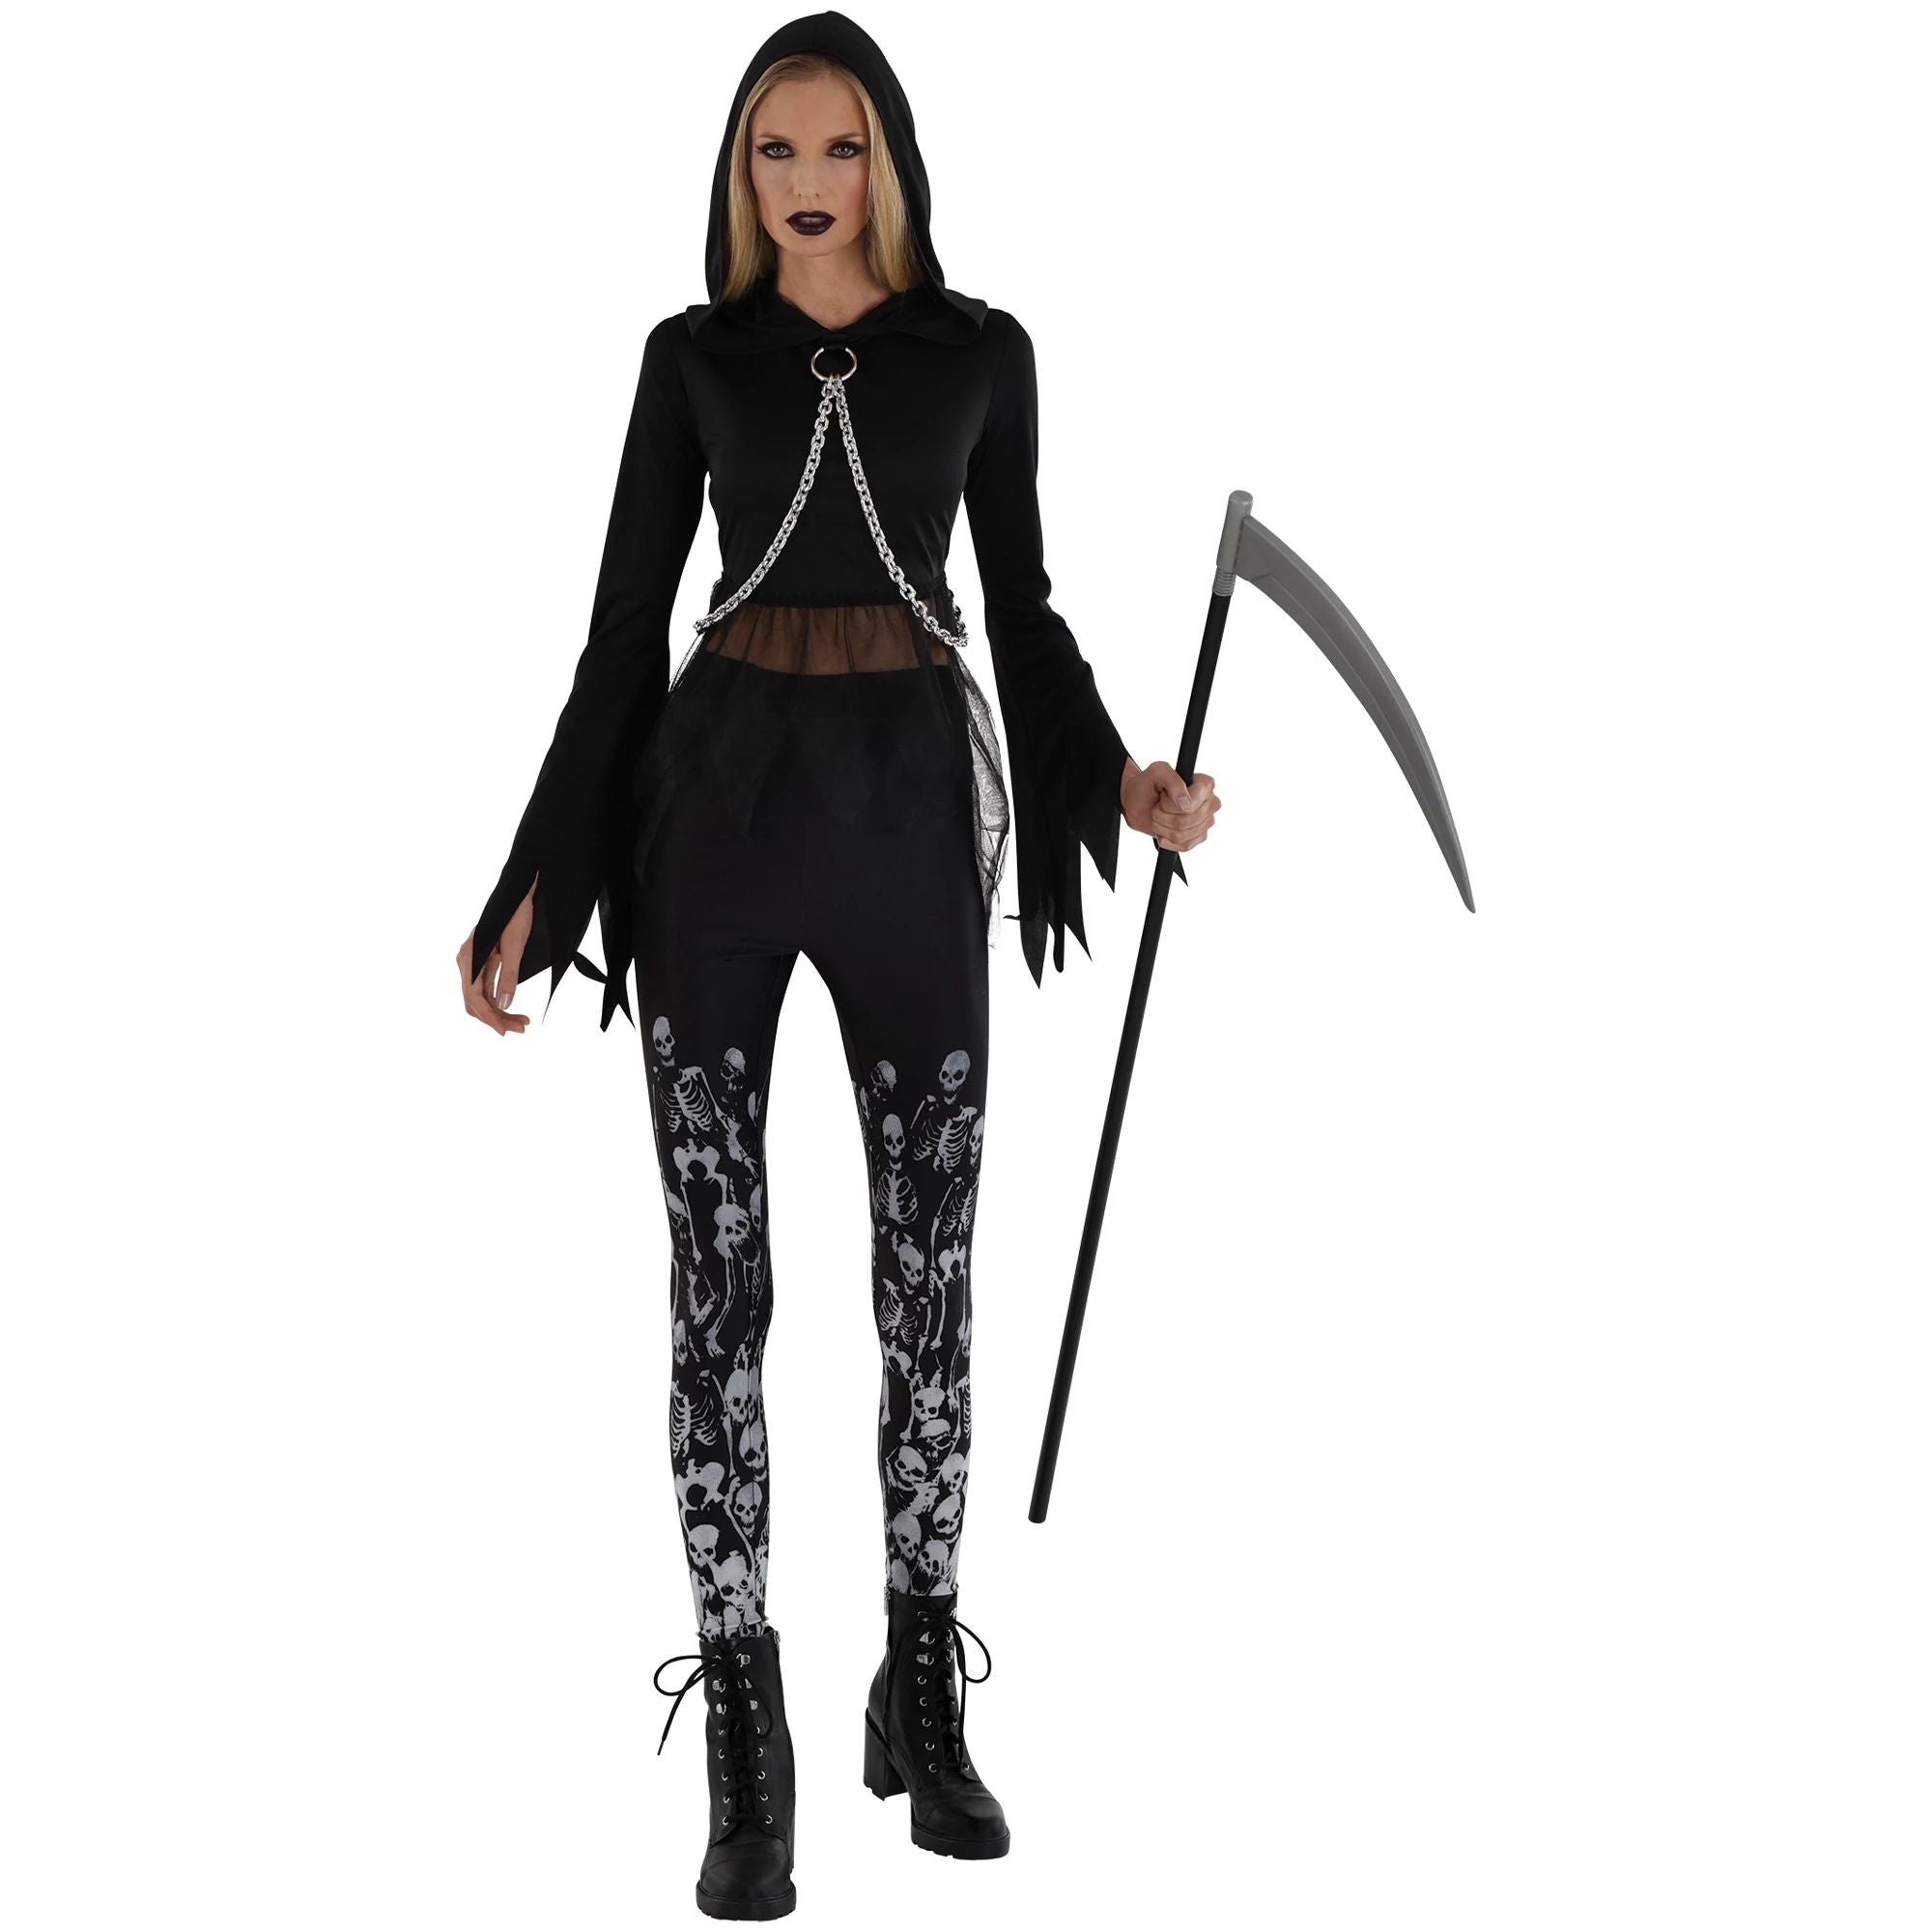 Amscan COSTUMES Medium (6-8) Women's Goth Reaper Costume